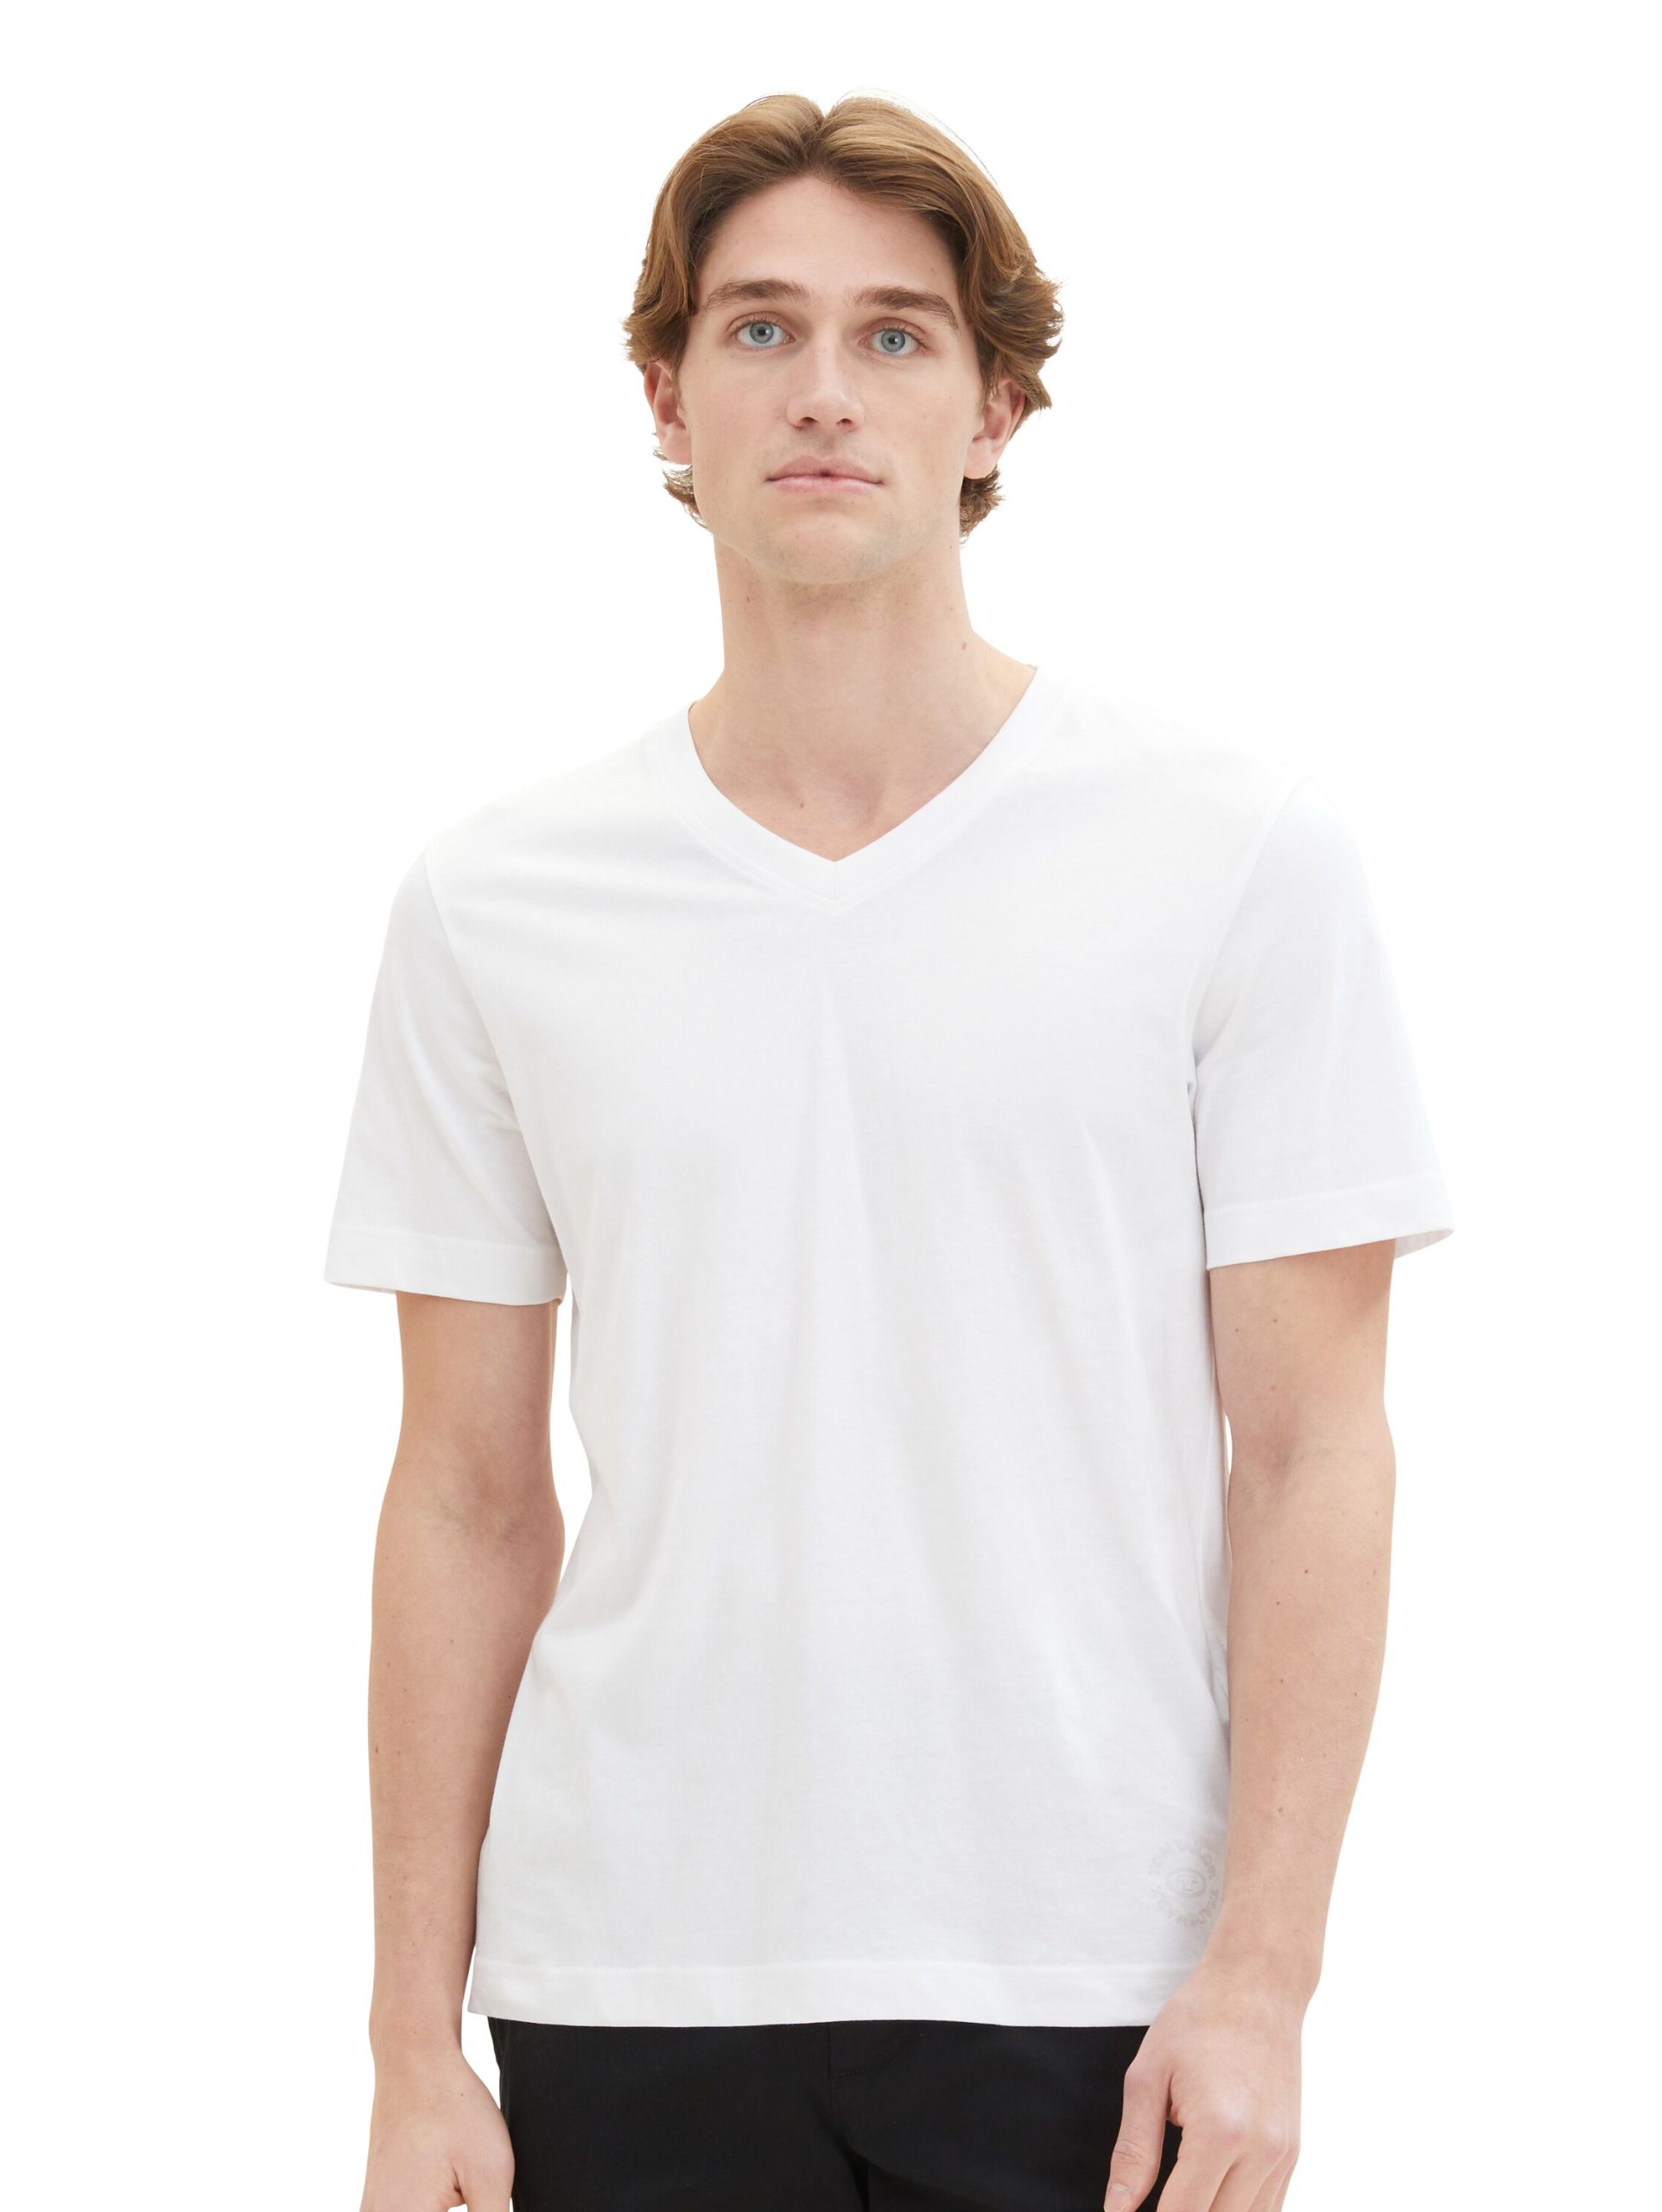 RUMMEL im mit – Tailor Doppelpack Tom T-Shirt V-Ausschnitt